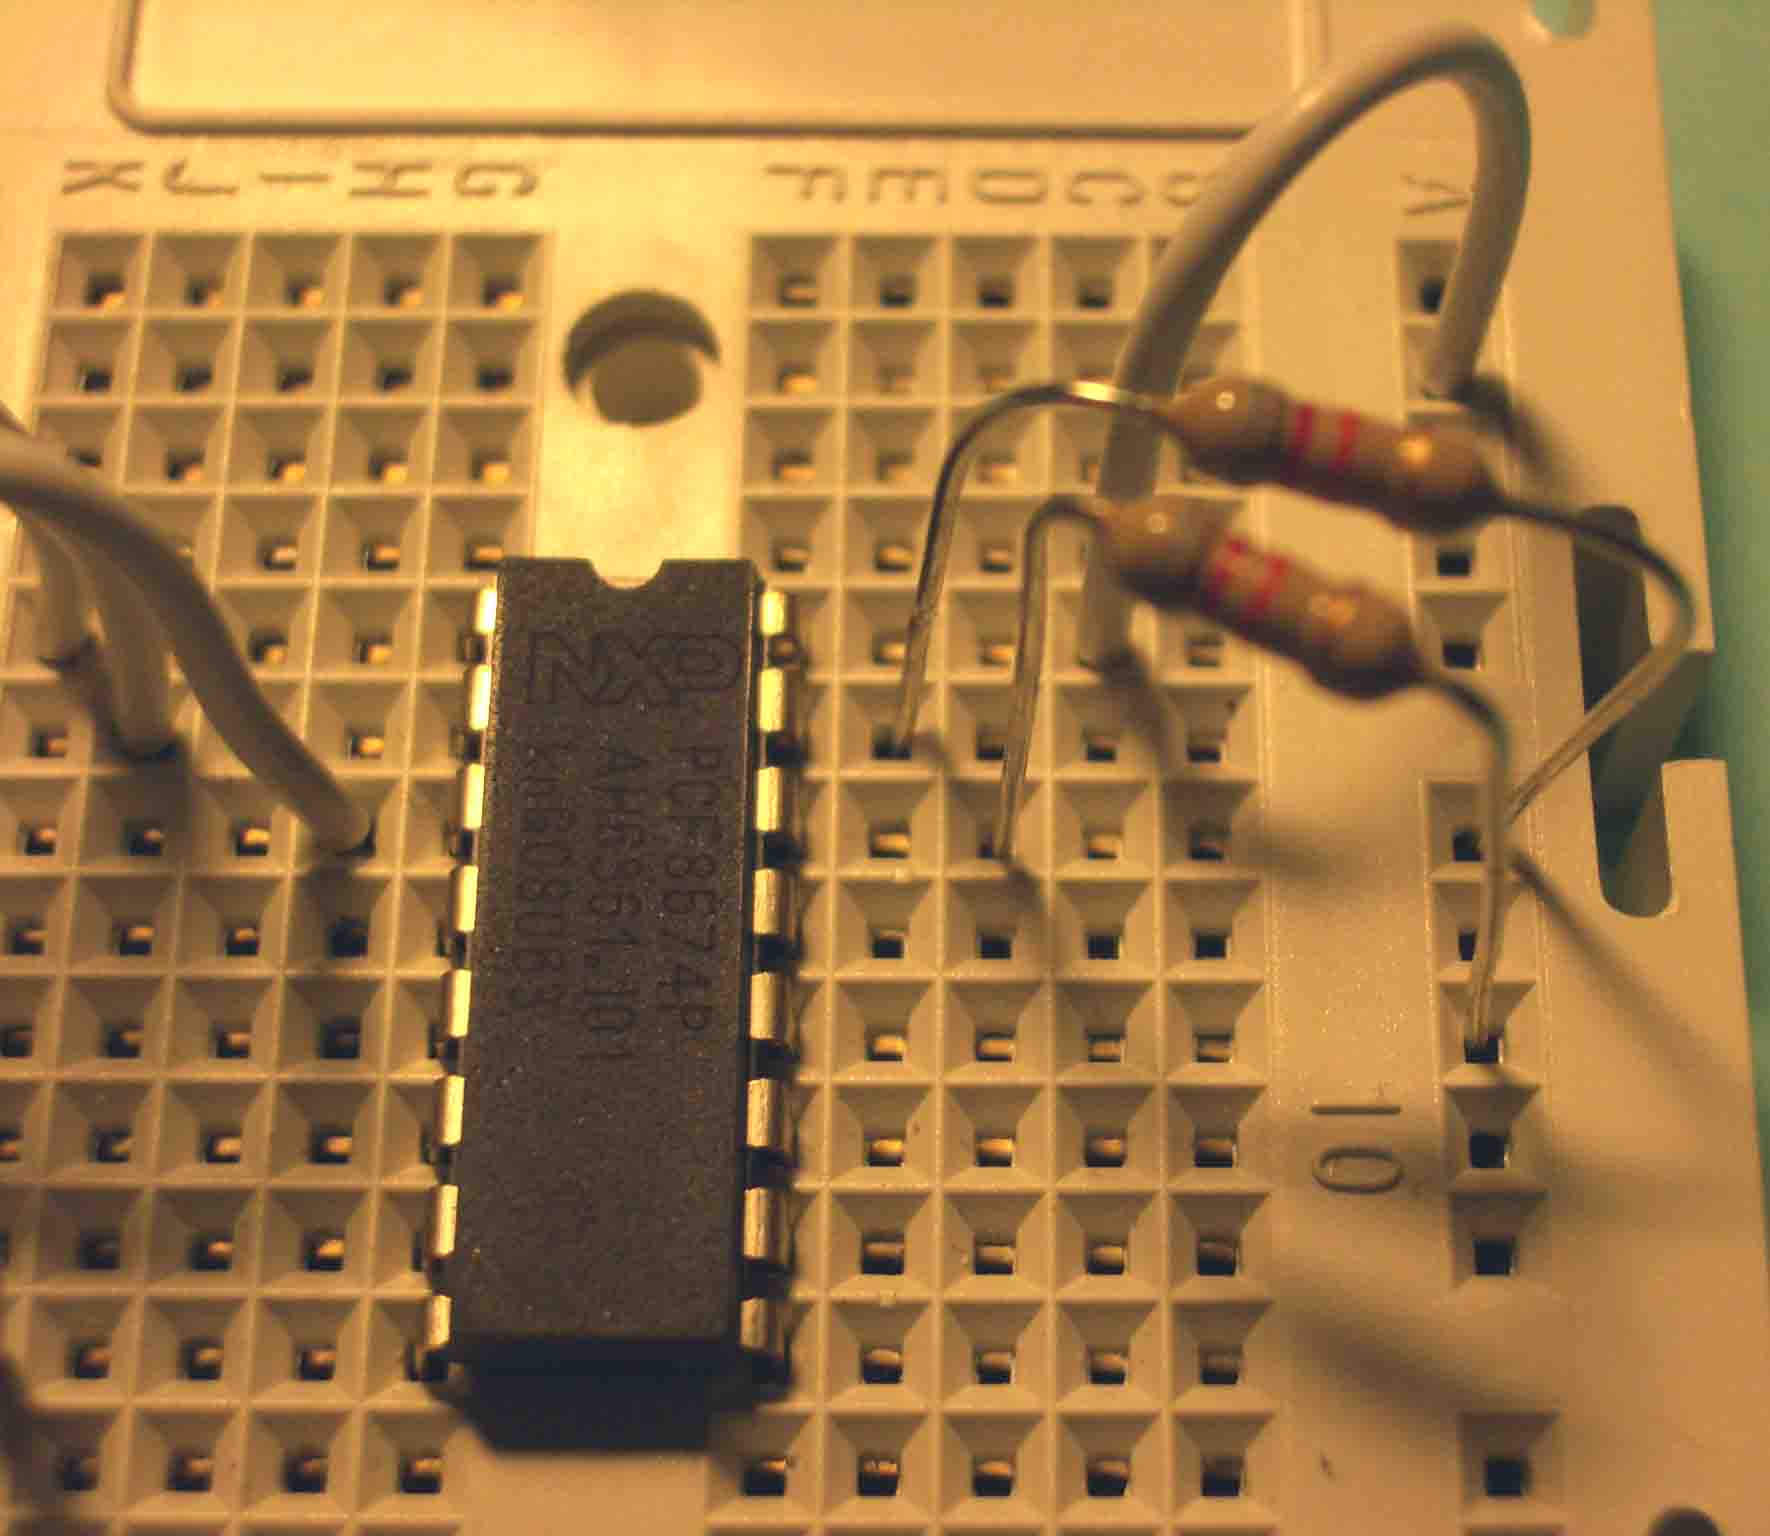 Montaje sensor digital Mindstorm NXT c1593